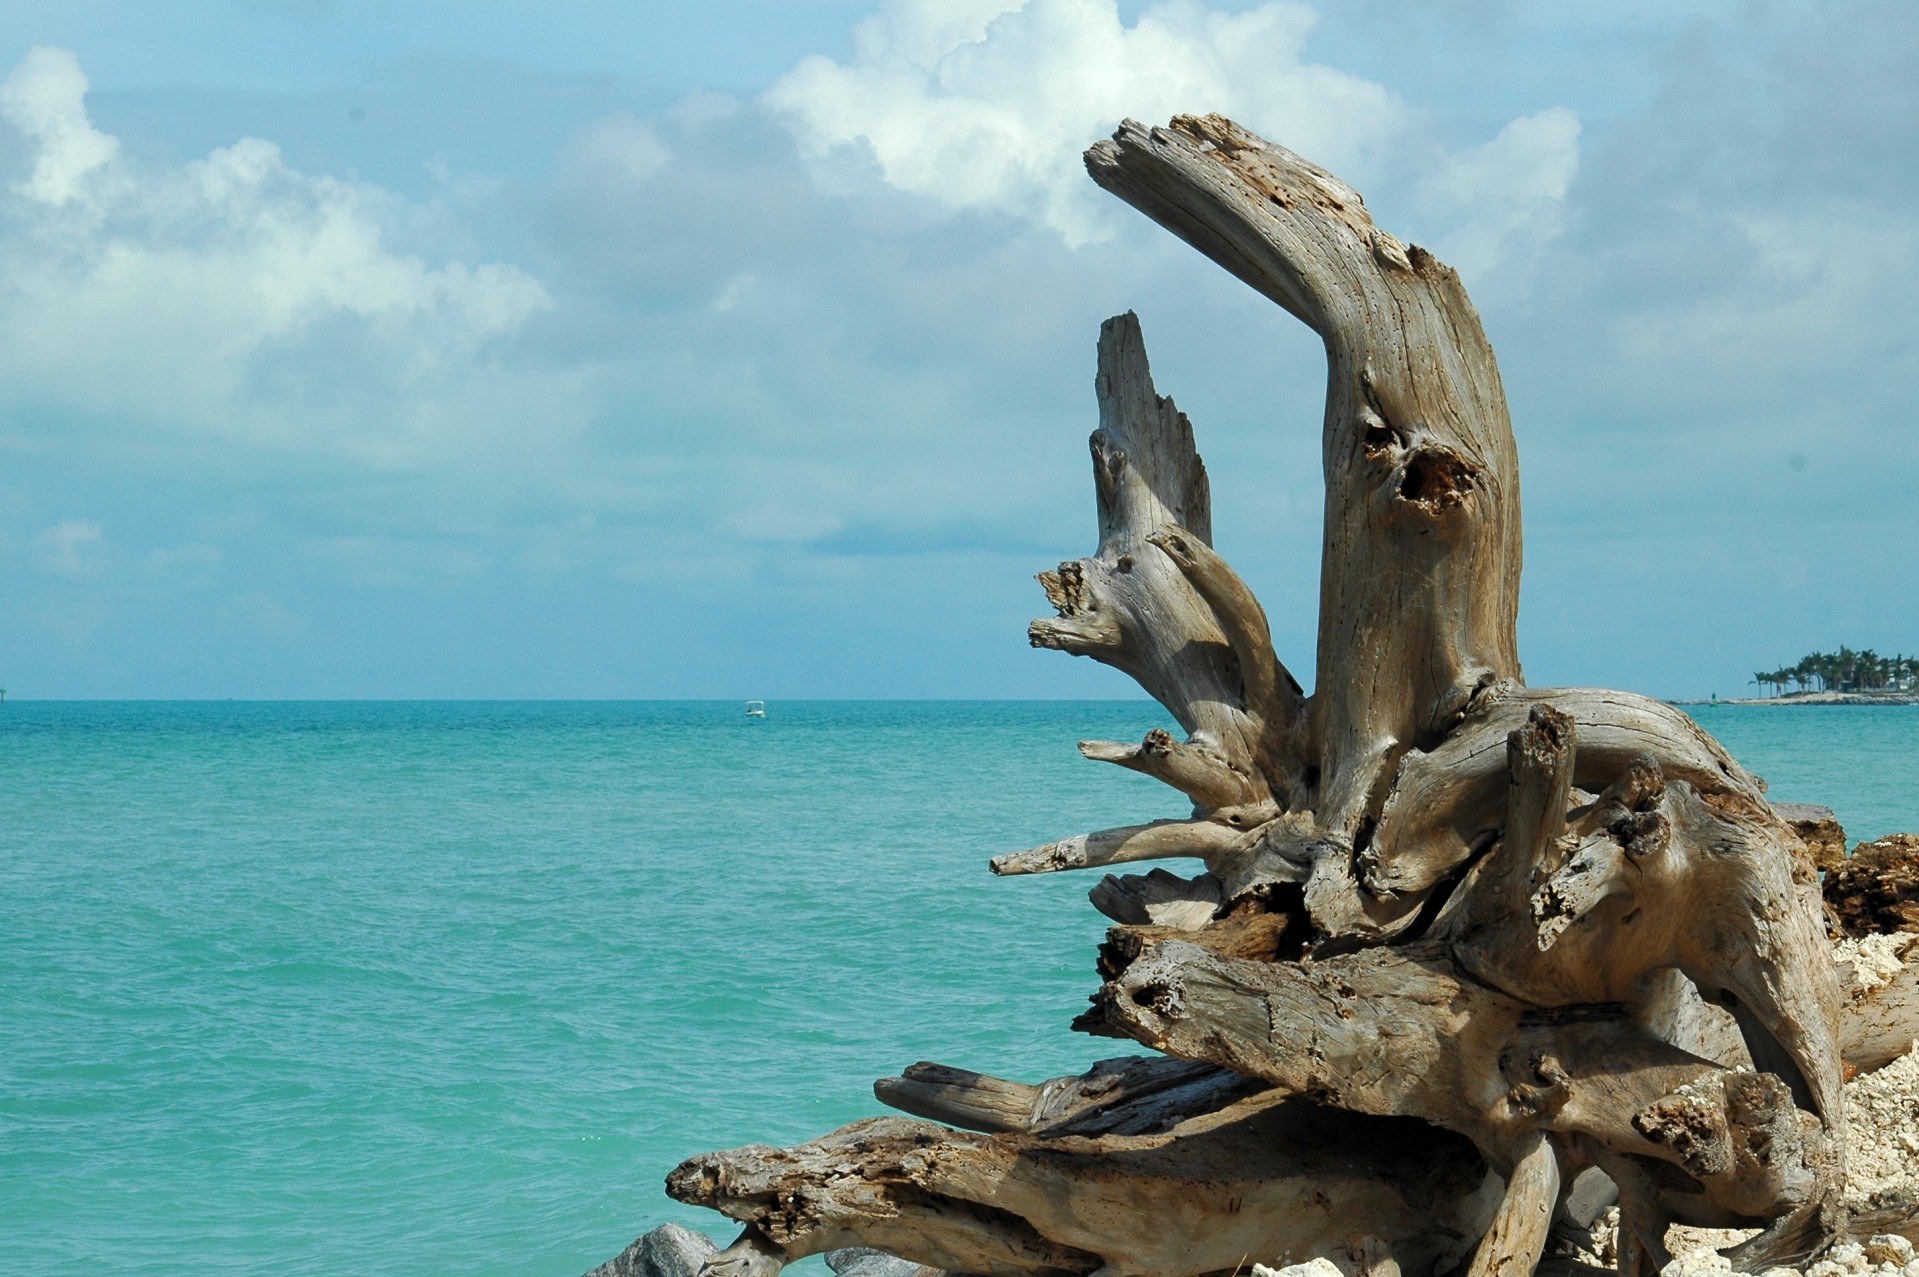 Driftwood On The Beach